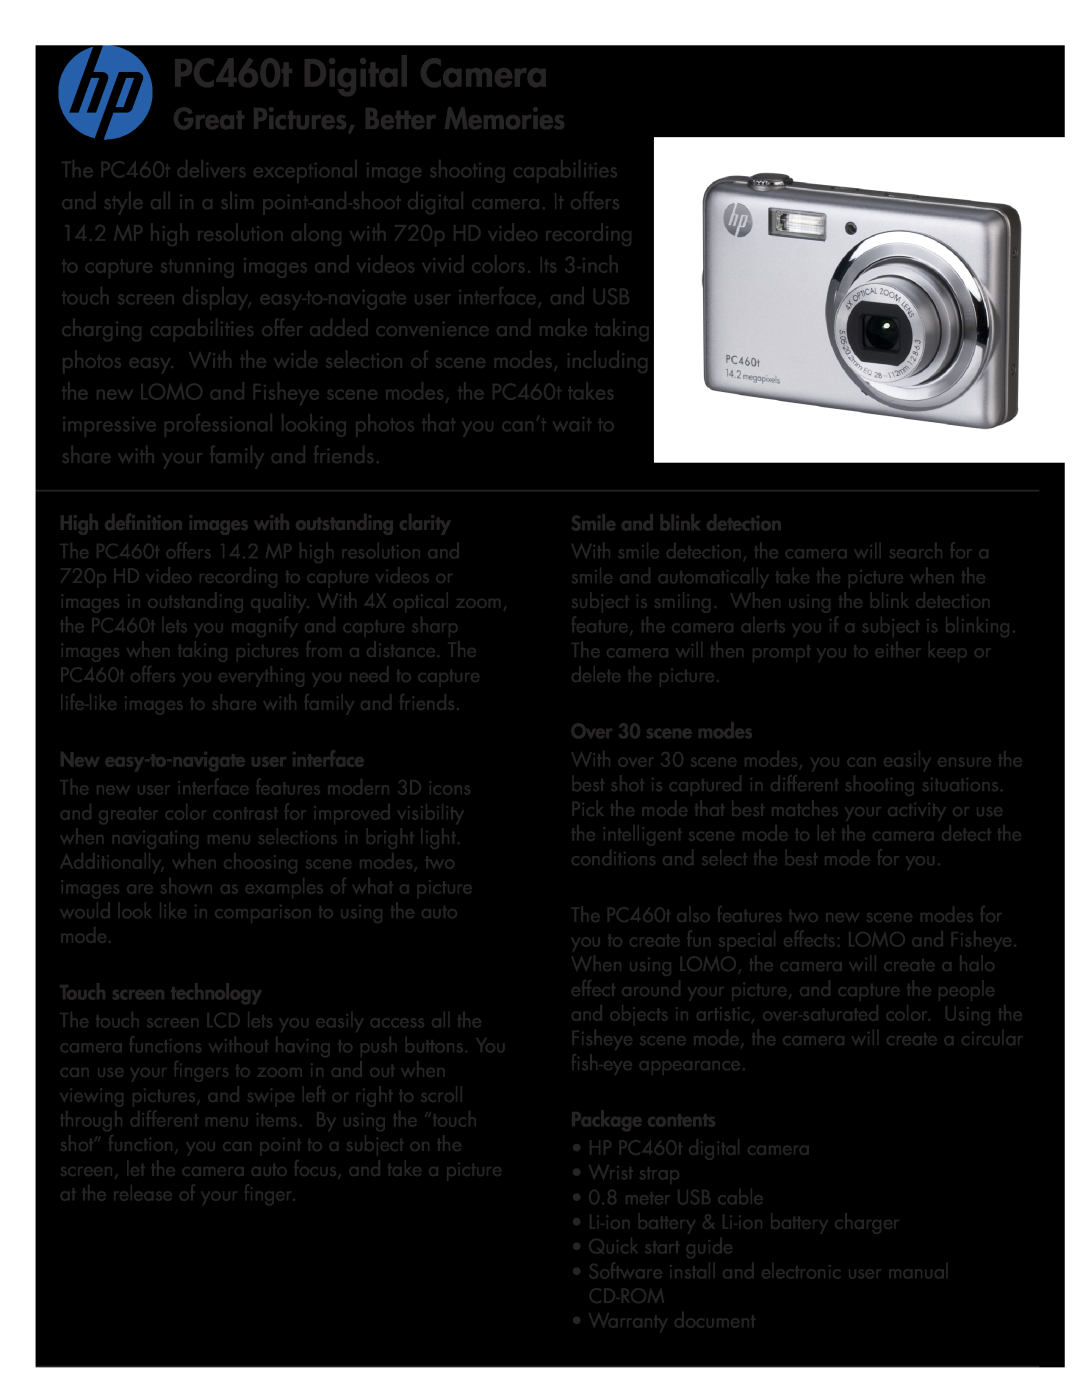 HP manual PC460t Digital Camera, Great Pictures, Better Memories 